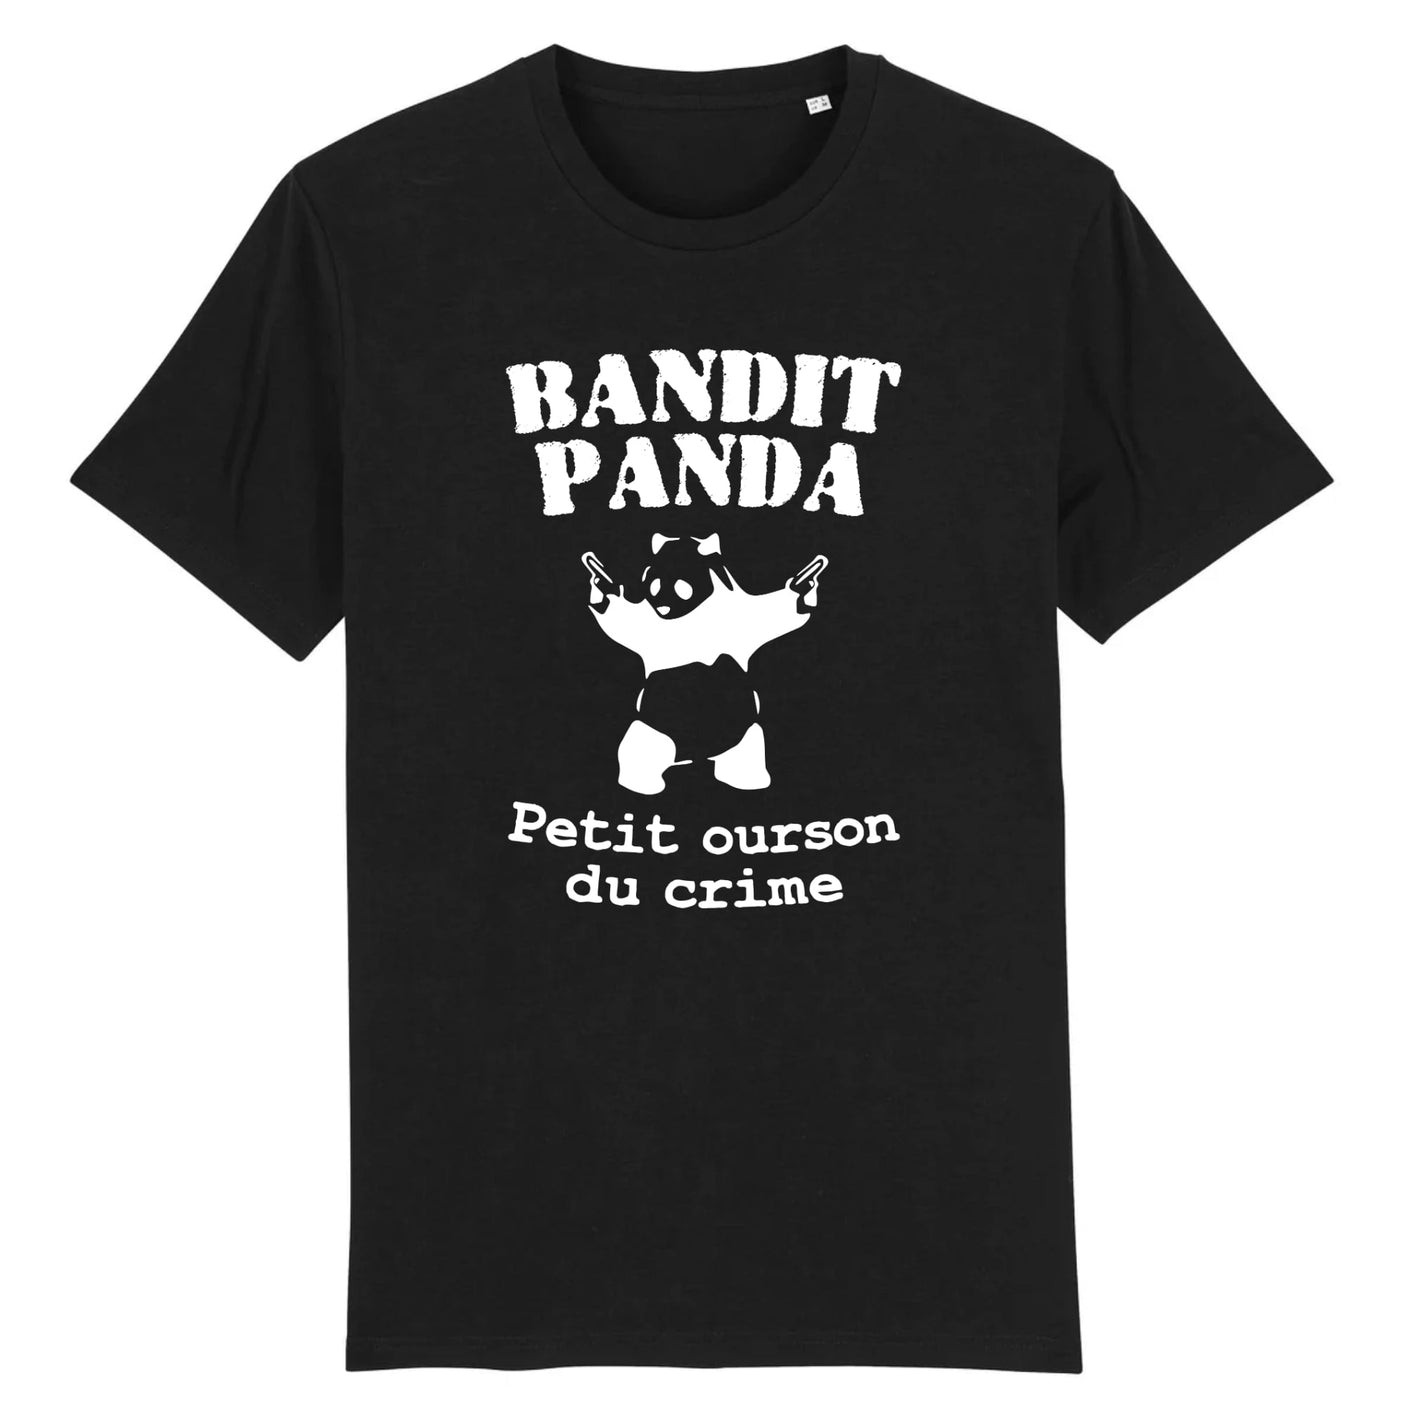 T-Shirt Homme Bandit panda 